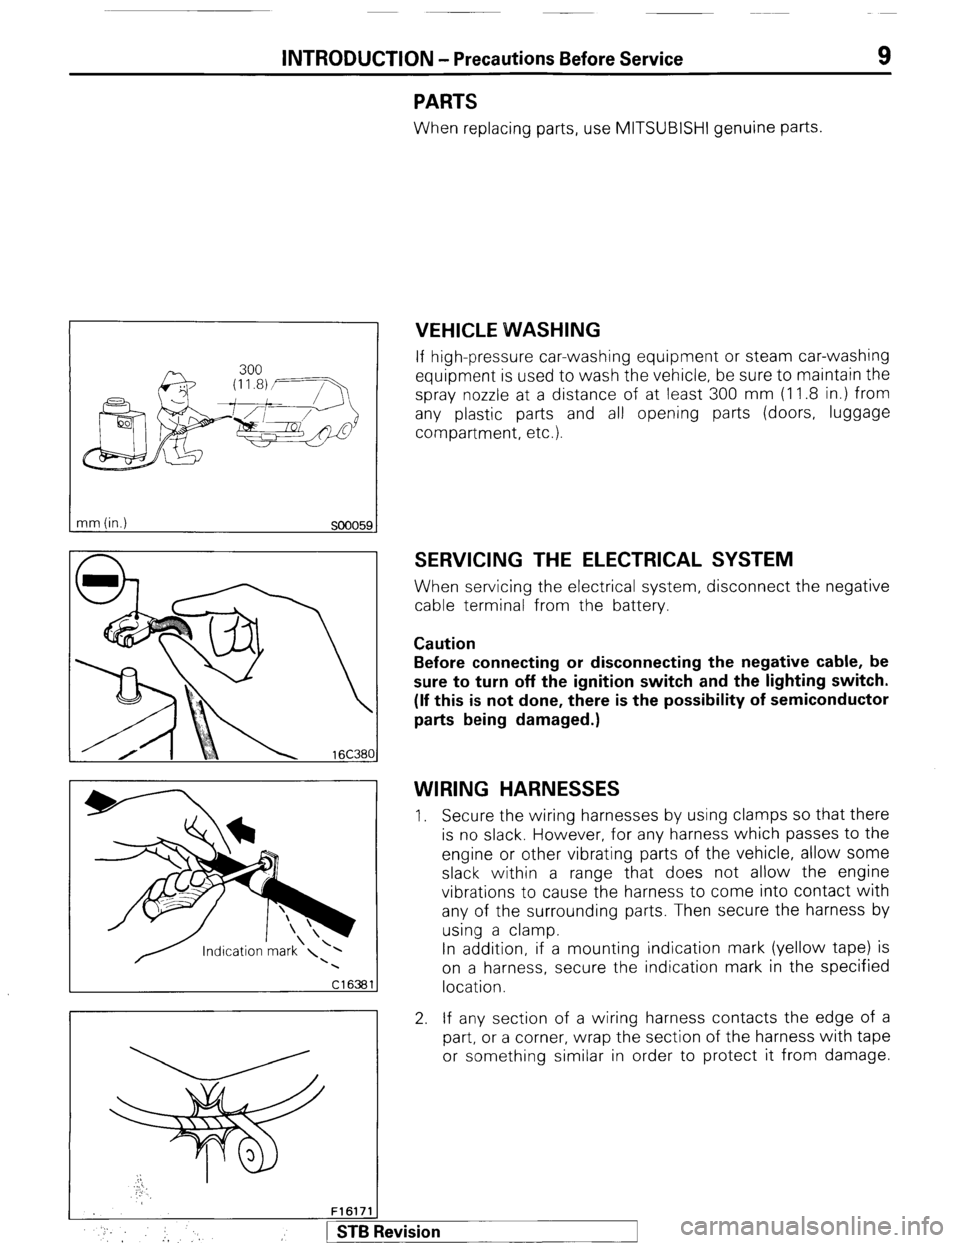 MITSUBISHI MONTERO 1987 1.G Workshop Manual INTRODUCTION - Precautions Before Service 9 
nm (in.) 
so0059 
PARTS 
When replacing parts, use MITSUBISHI genuine parts. 
VEHICLE WVASHING 
If high-pressure car-washing equipment or steam car-washing